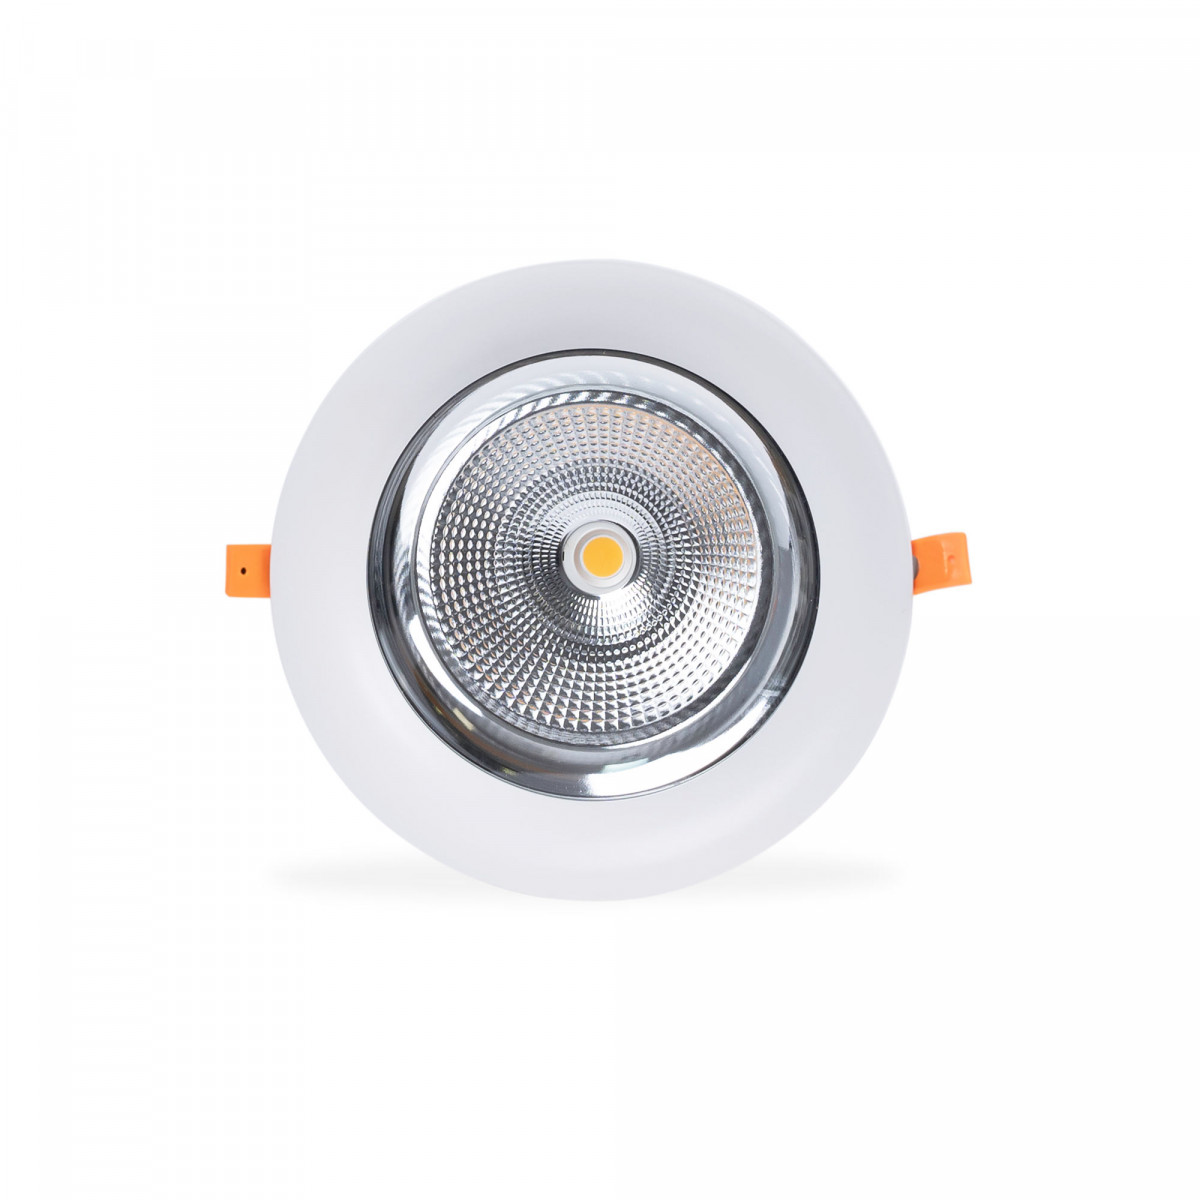 Downlight LED especial para pescaderías - 30W - Ø210 mm